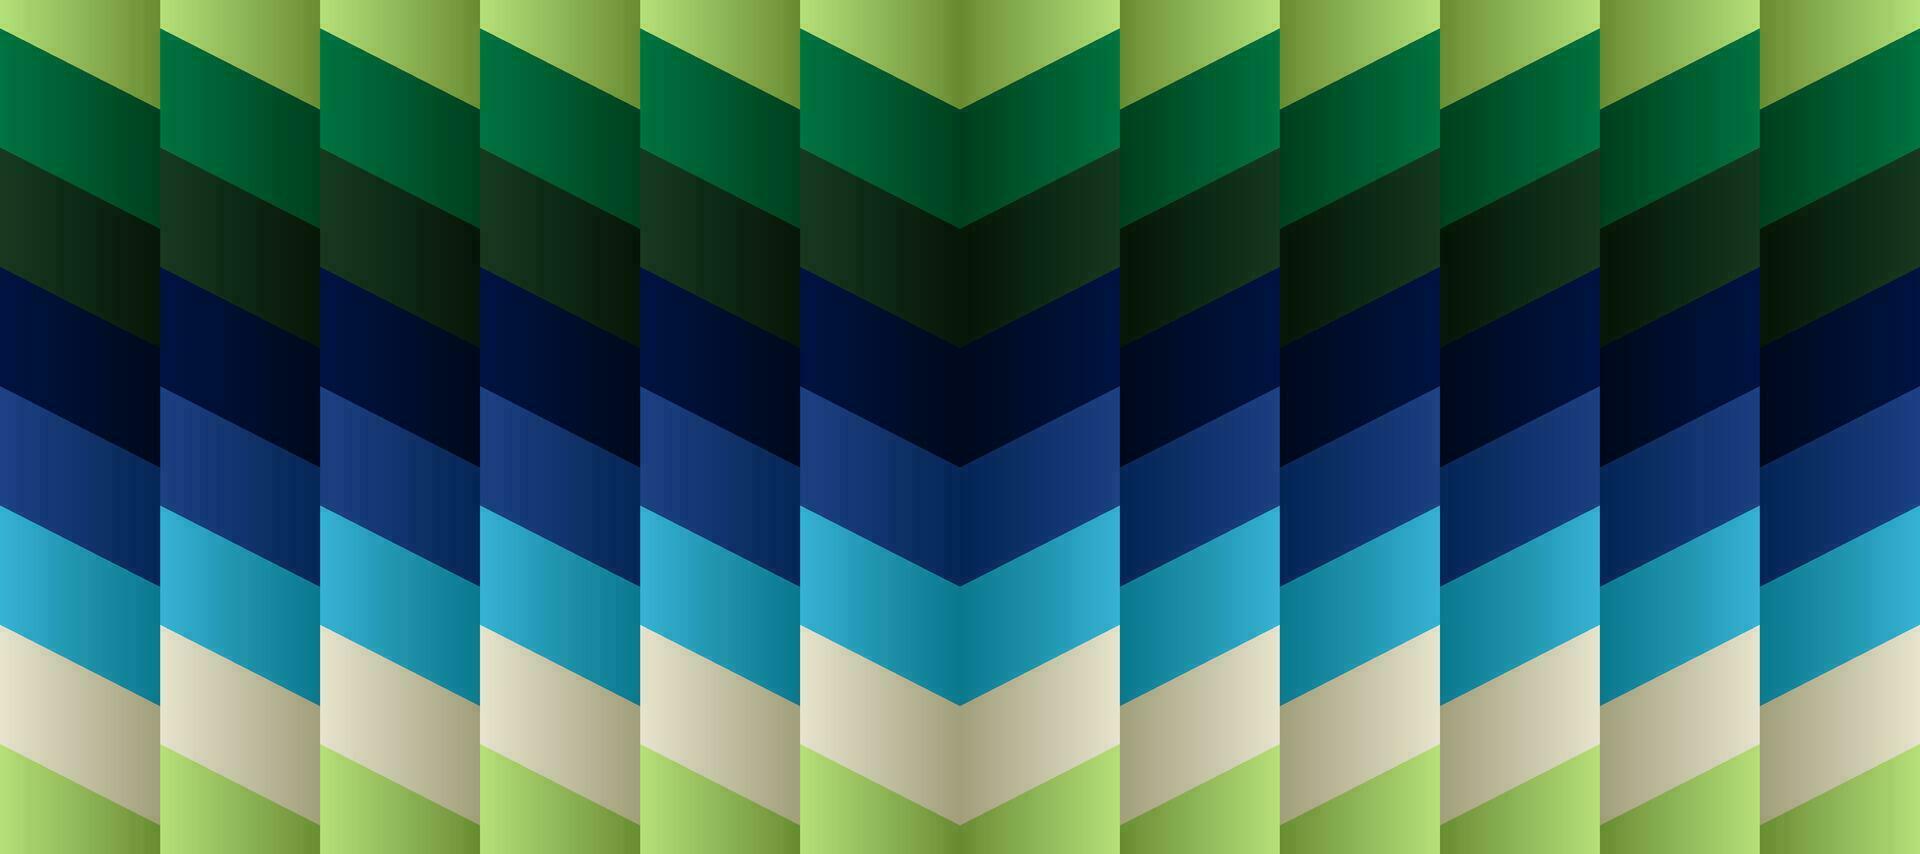 färgrik lutning geometrisk retro grön triangel mönster bakgrund vektor